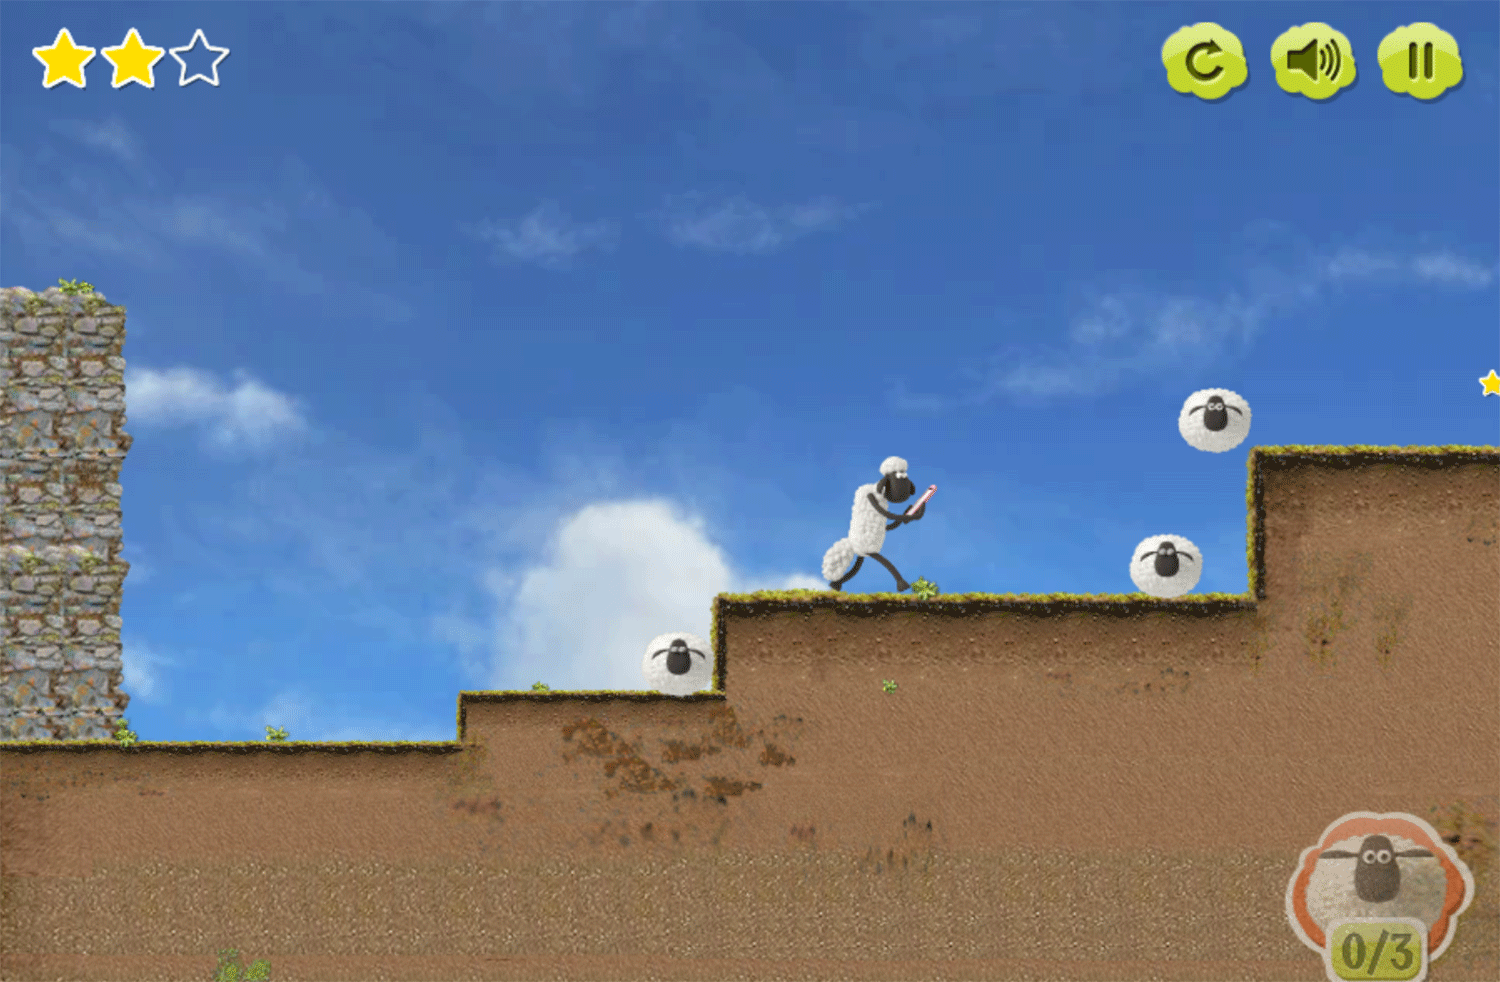 Shaun the Sheep App Hazard 2 Game Screenshot.